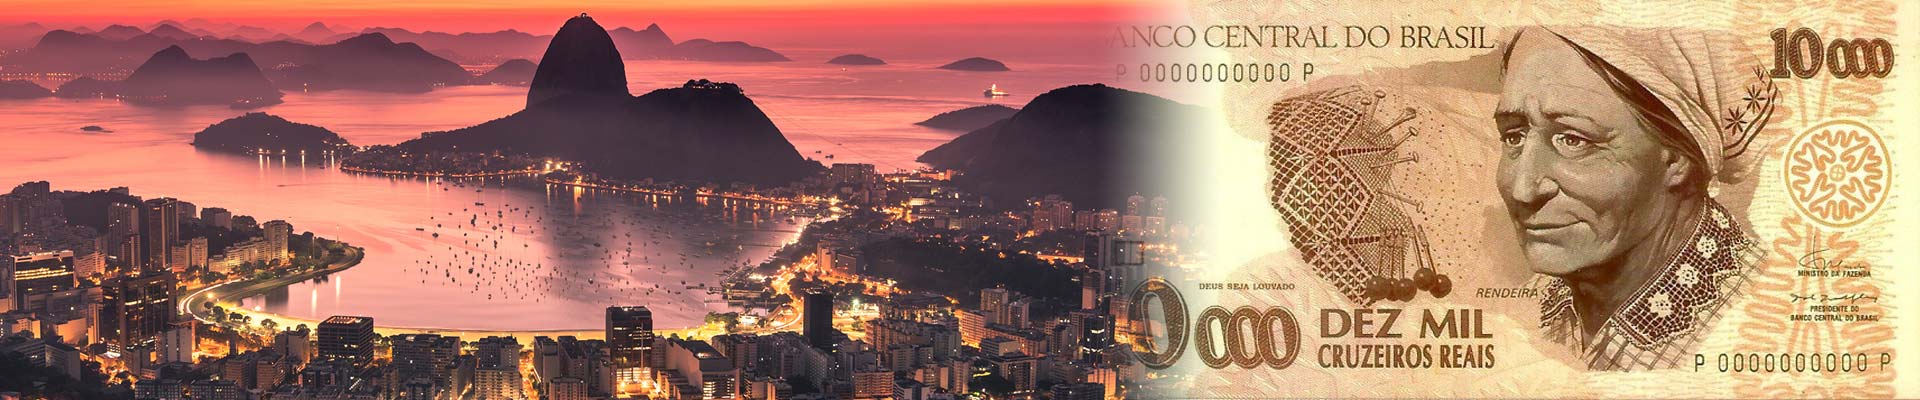 An Uncirculated Brazilian Banknote header image